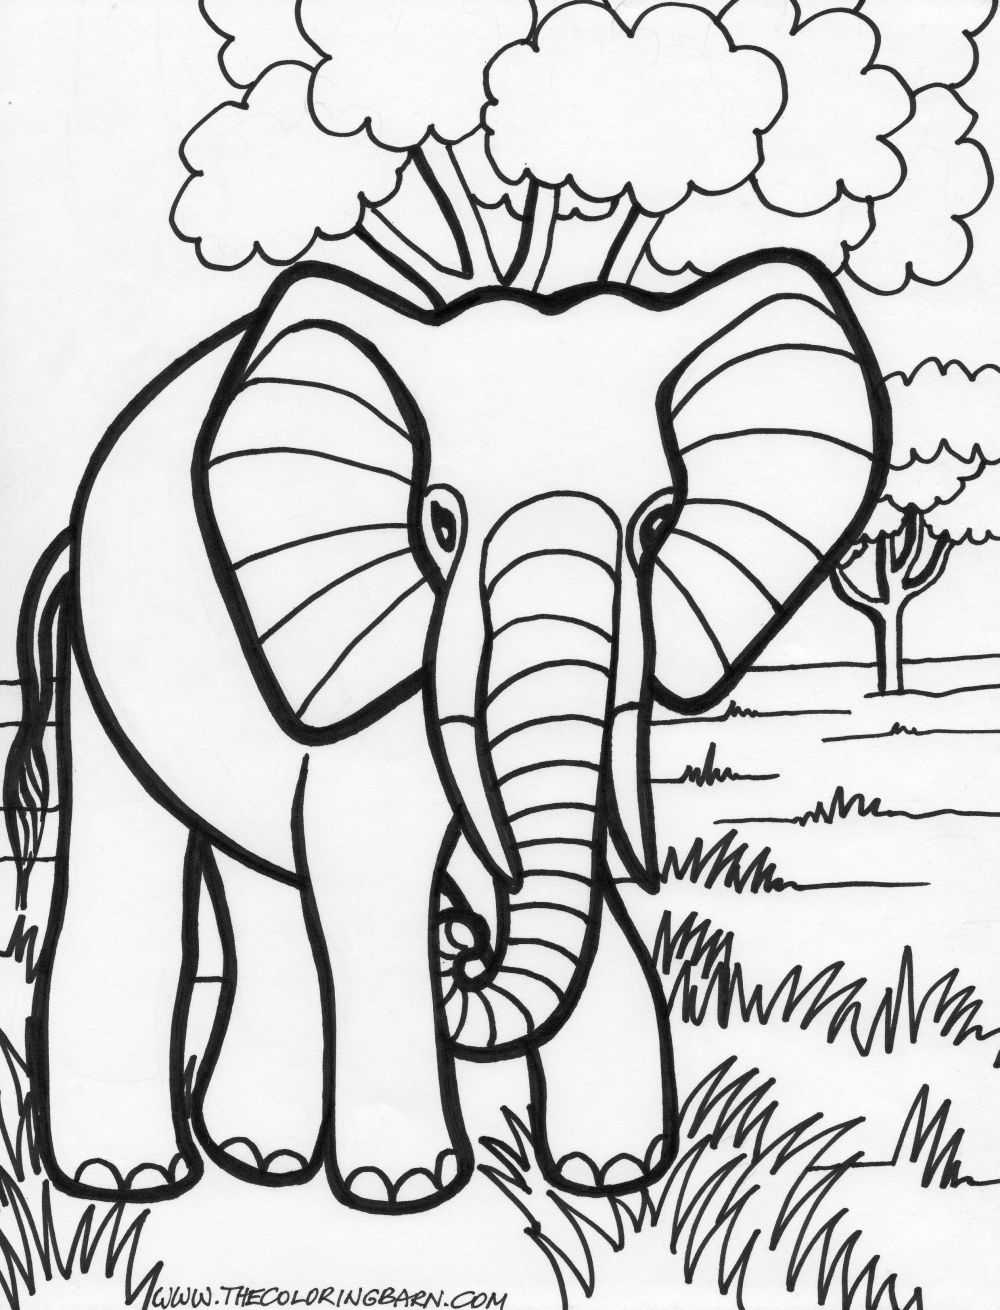 Download Jarvis Varnado: 14 Elephant Coloring Pages for Kids